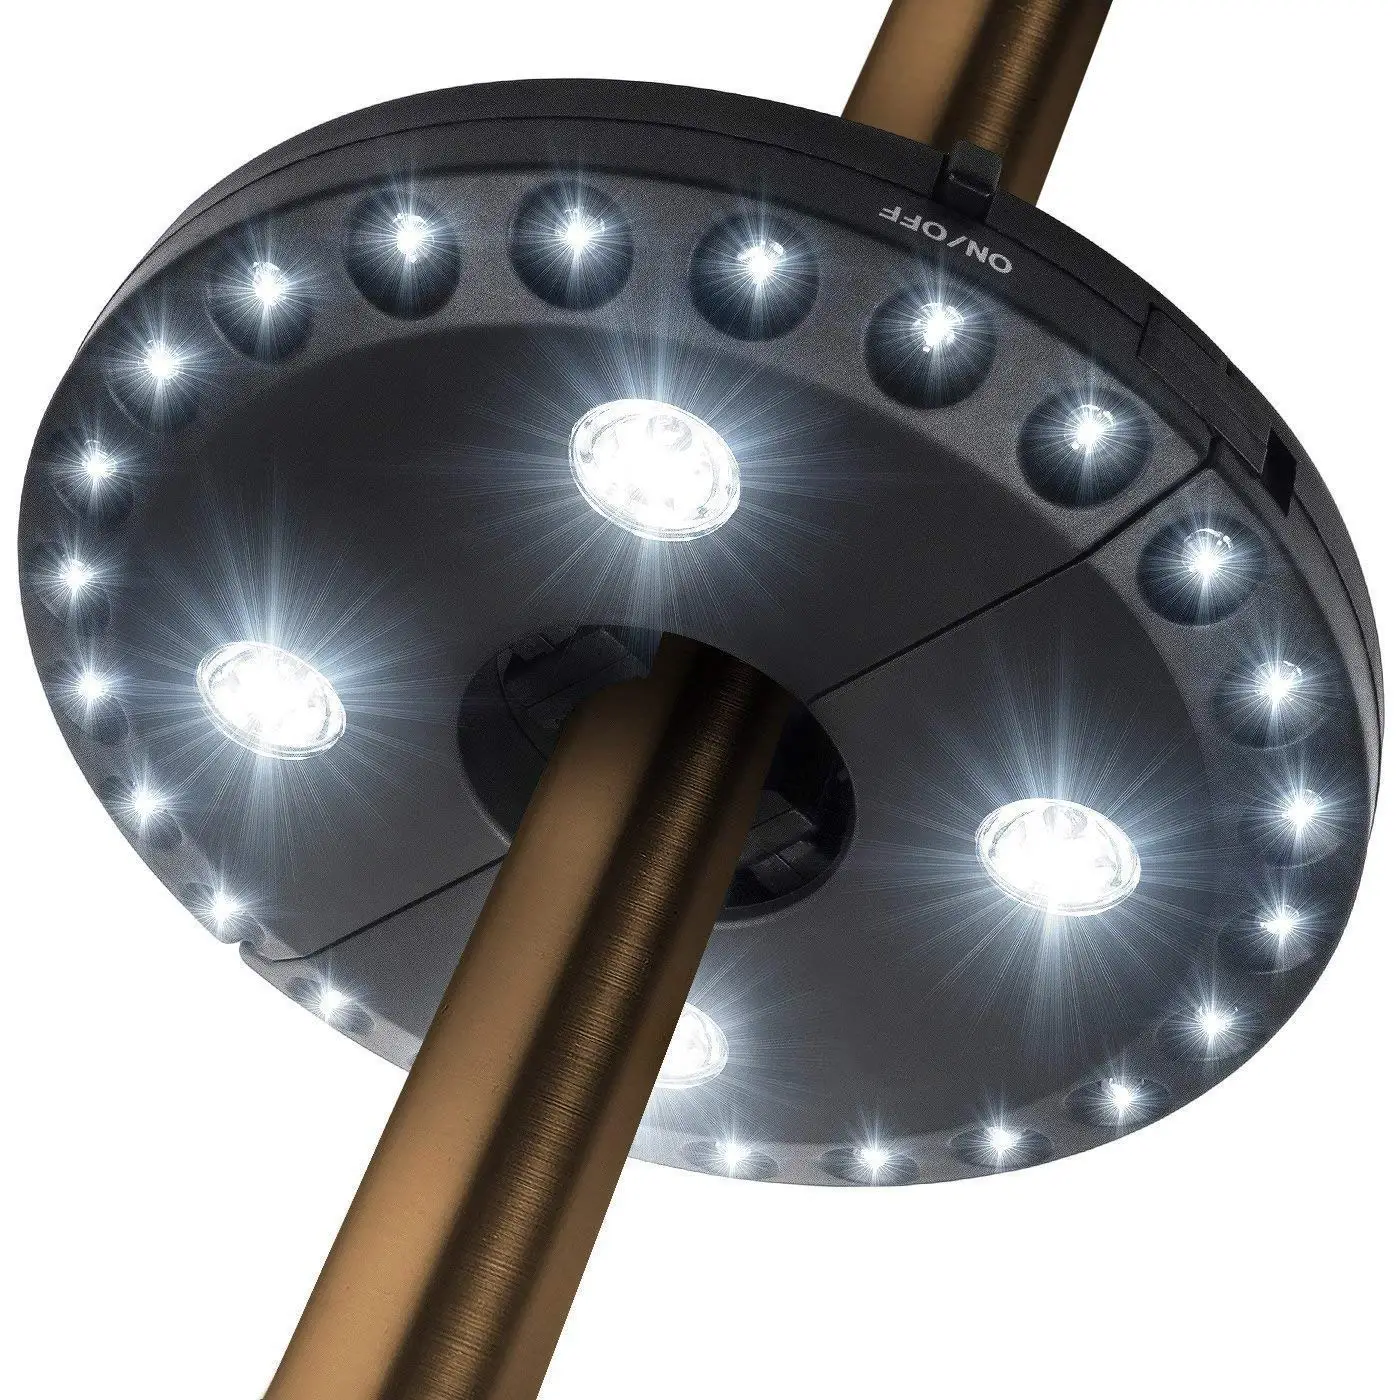 

Patio Umbrella Light 3 Brightness Modes Cordless 28 LED Lights at 200 lumens-4 x AA Battery Operated Umbrella Pole Light for Pat